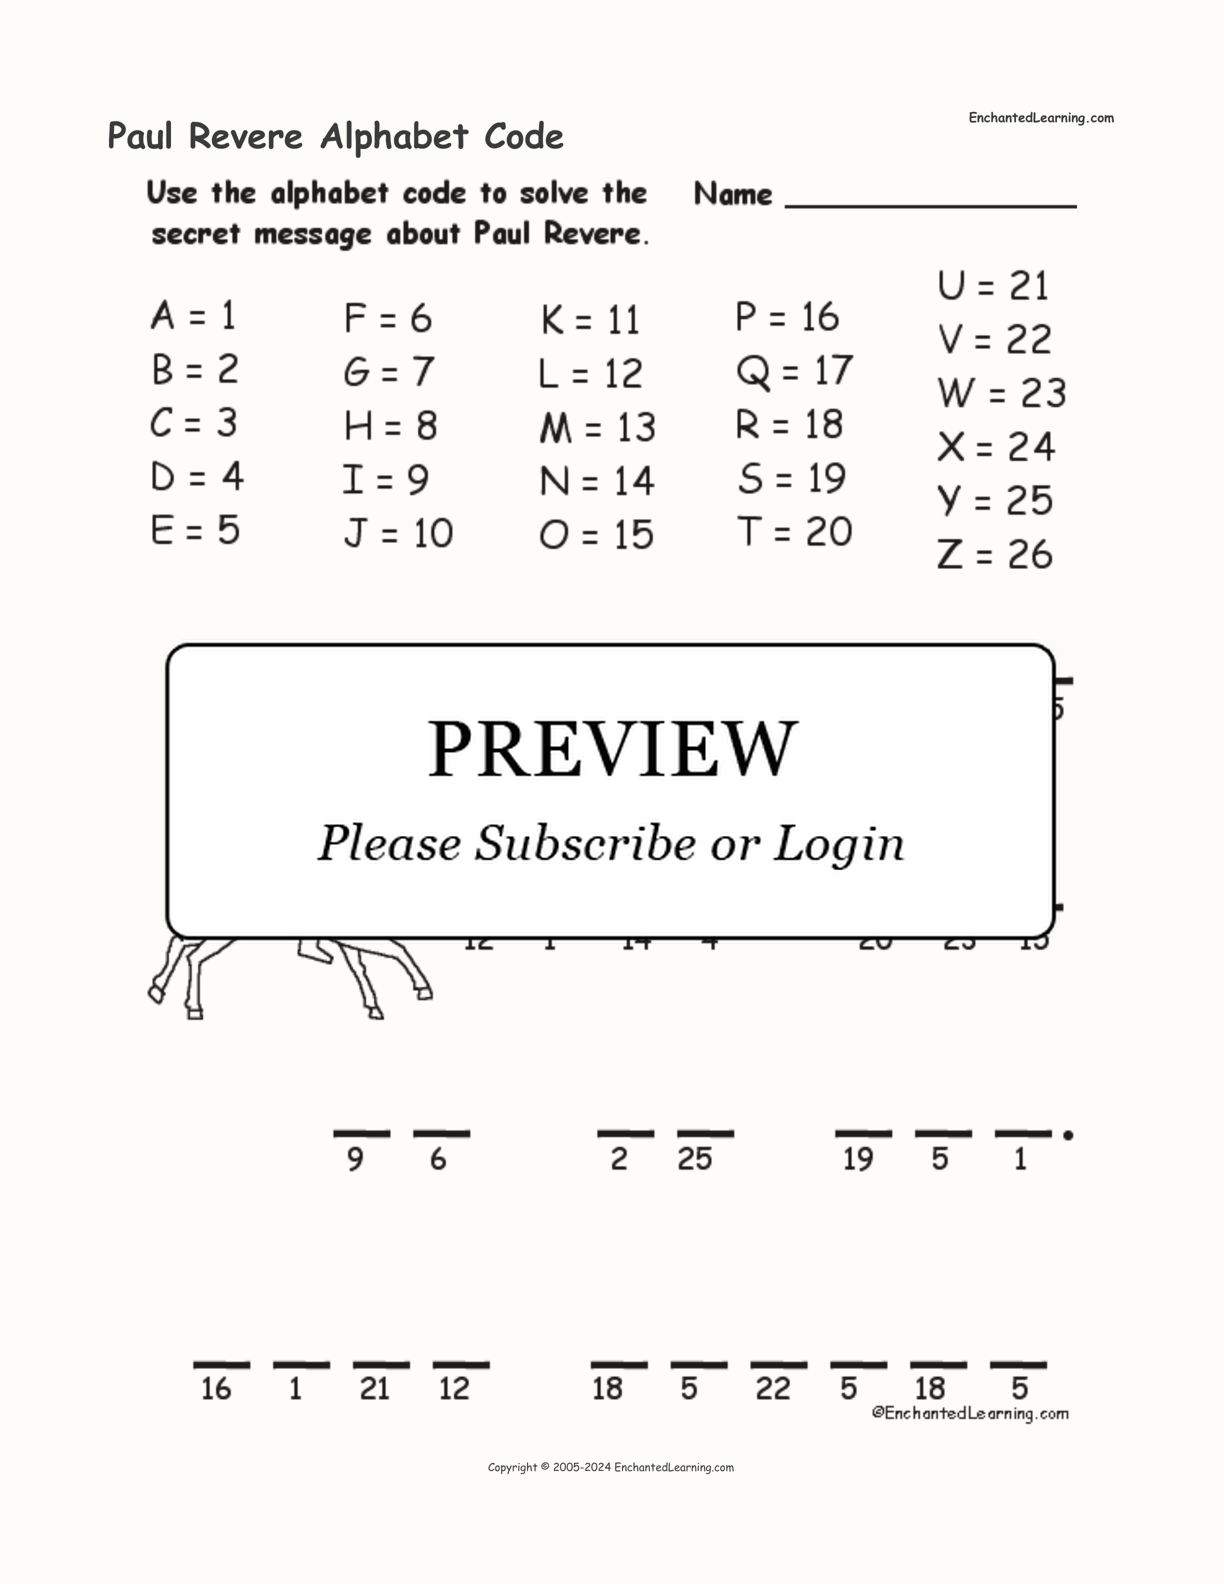 Paul Revere Alphabet Code interactive worksheet page 1